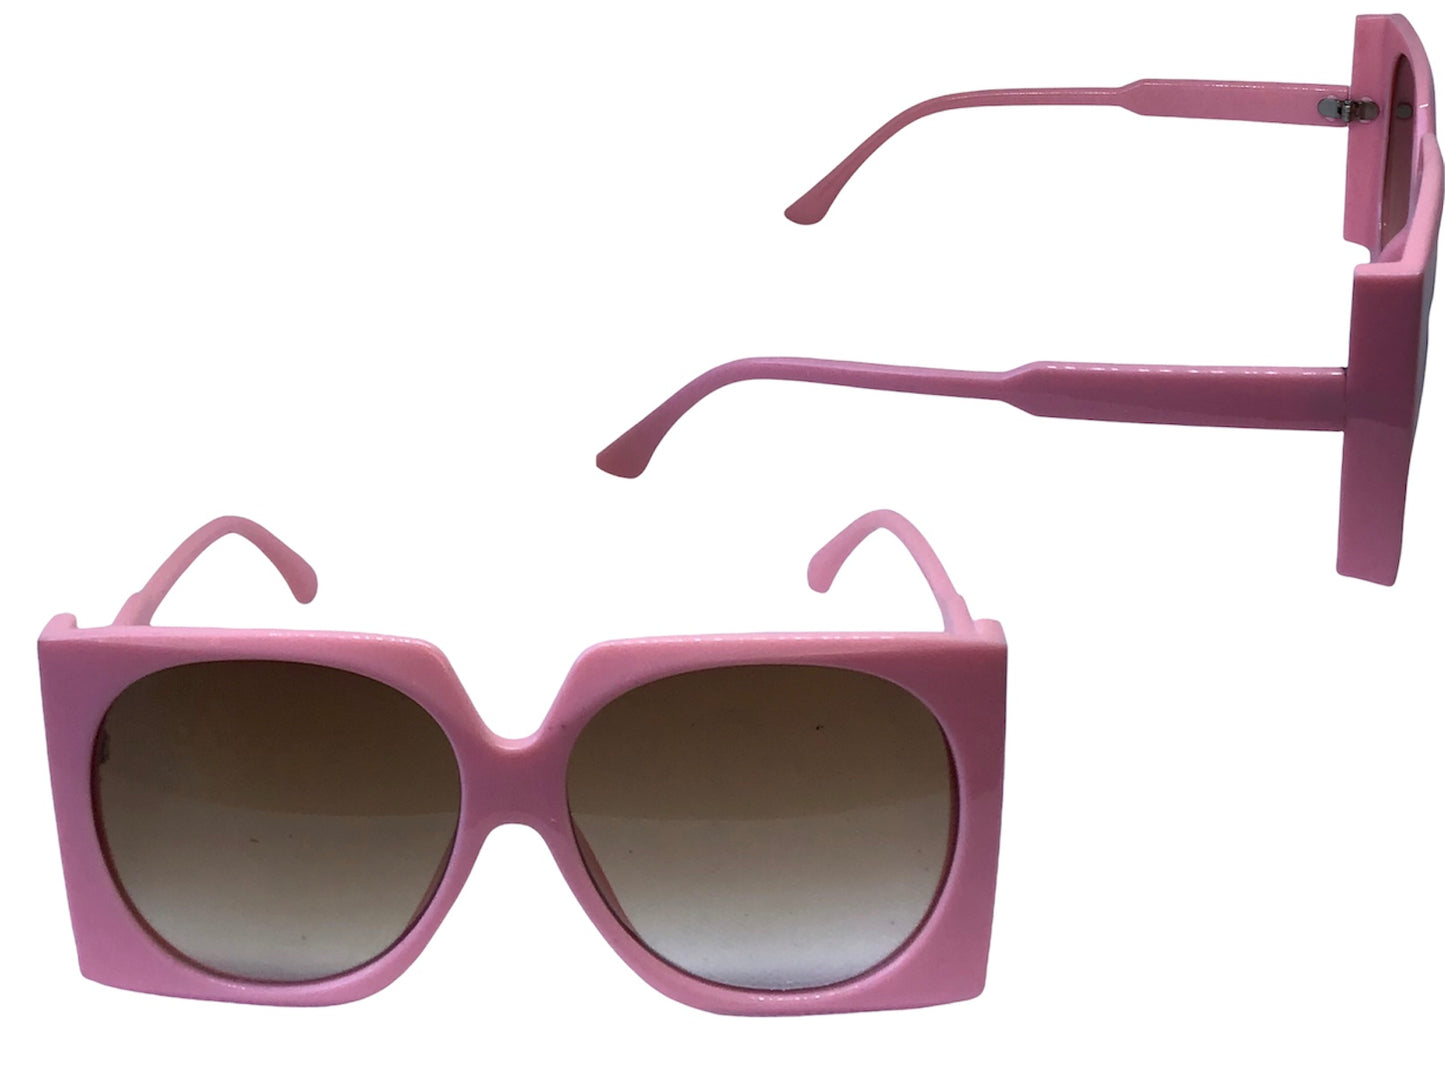 1-800-Barbie sunglasses